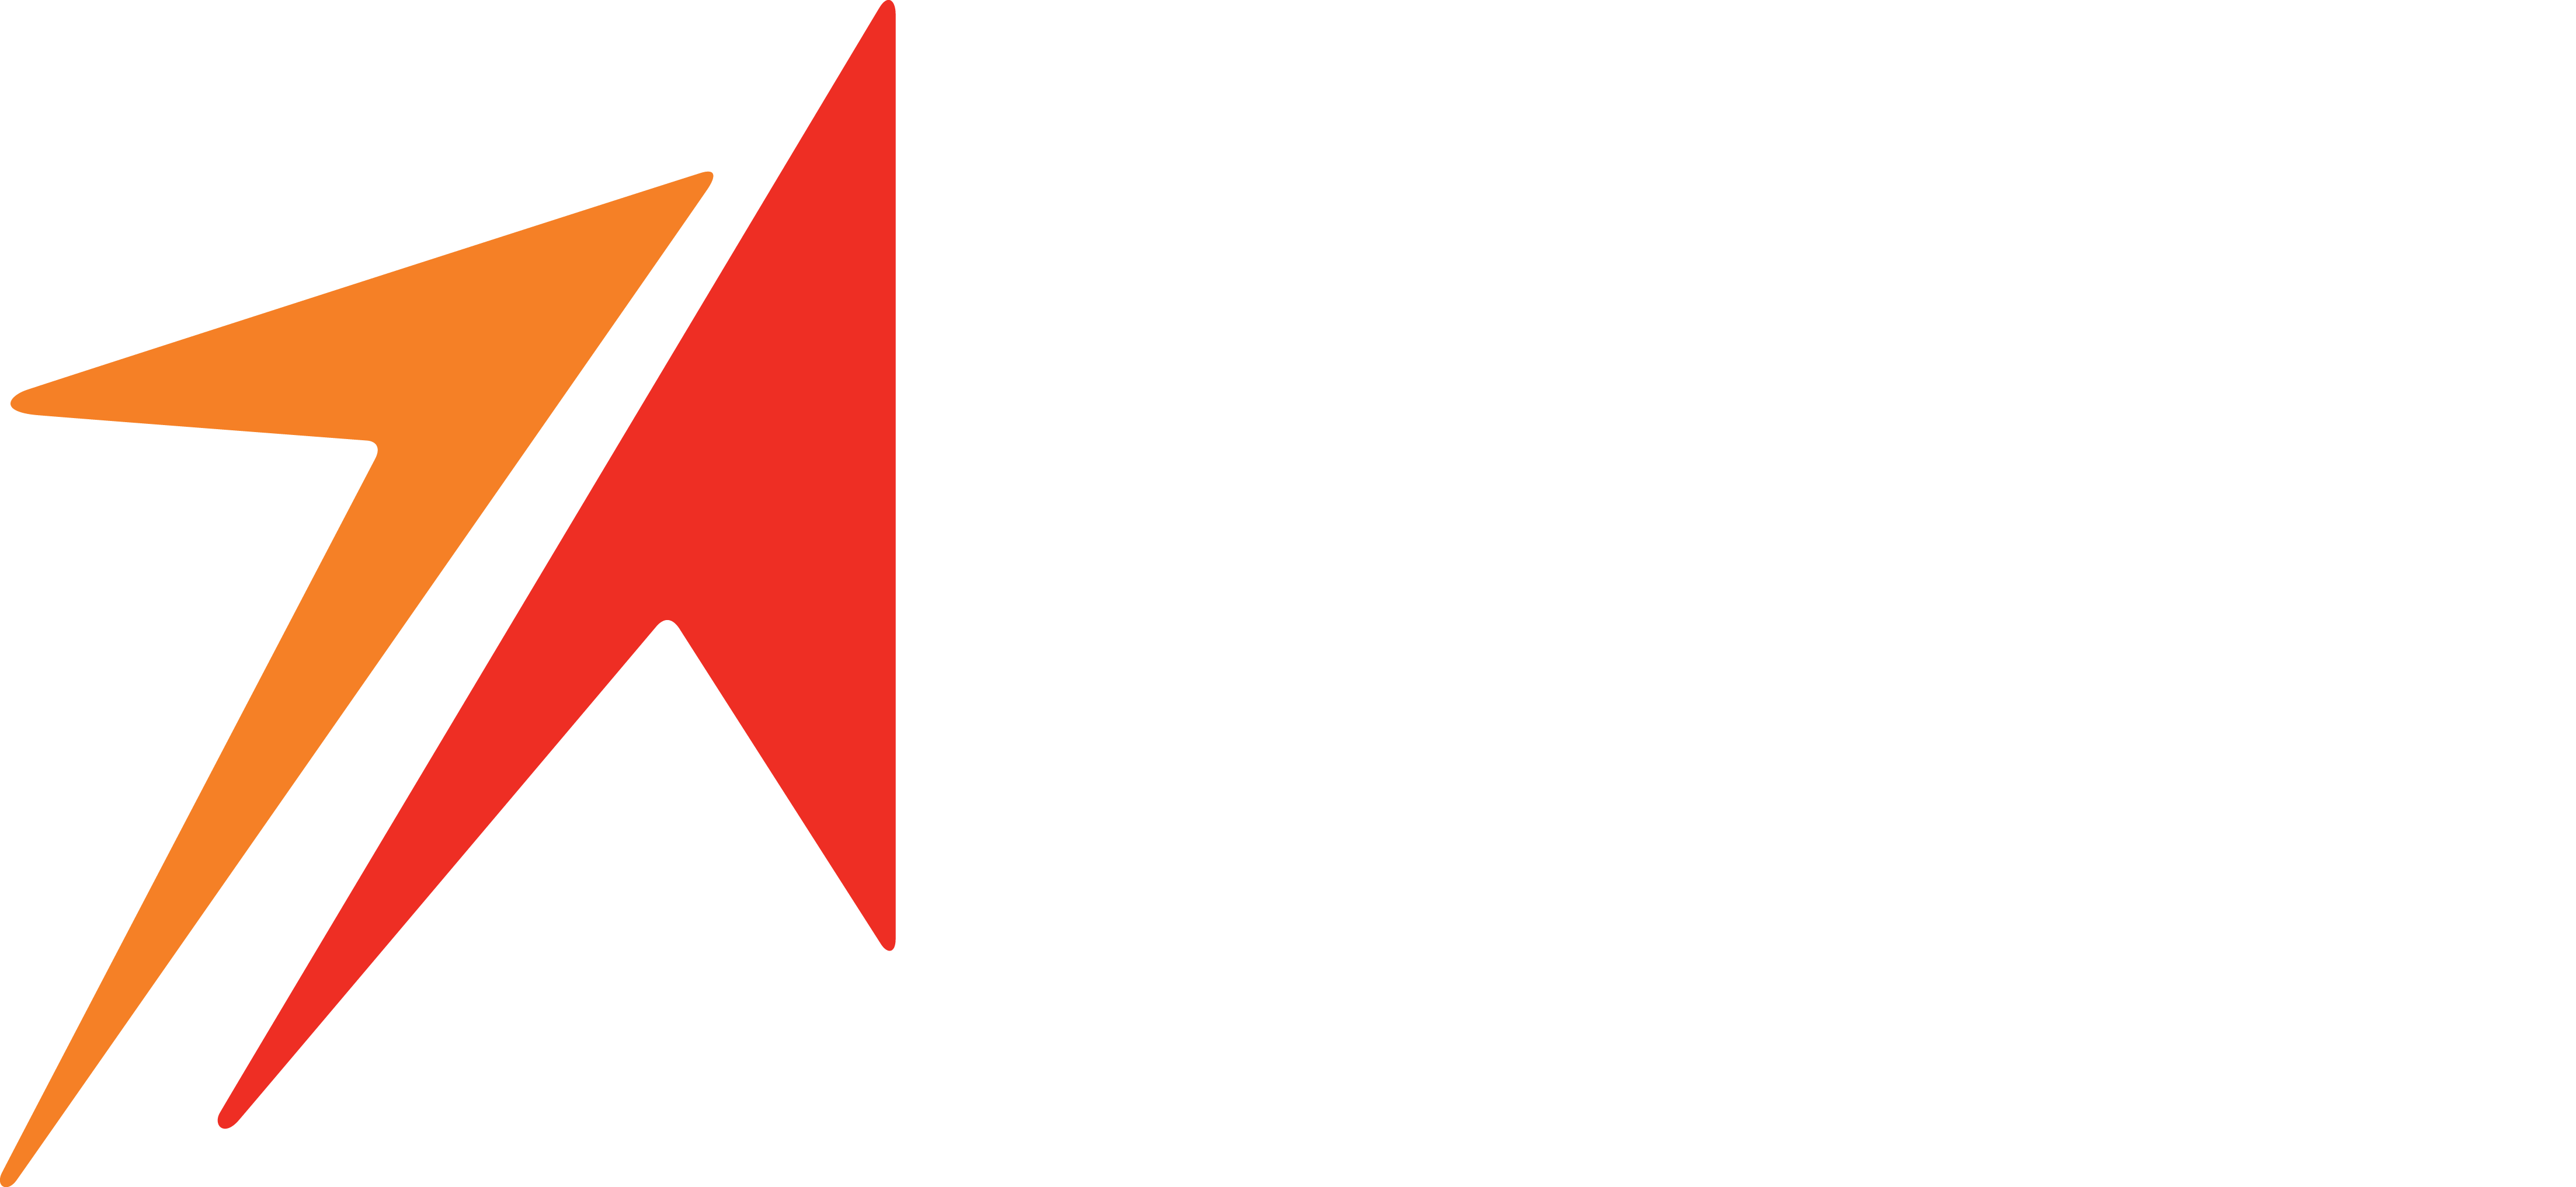 Red Travel Logo - Travel Agency Network. Travel Leaders Network